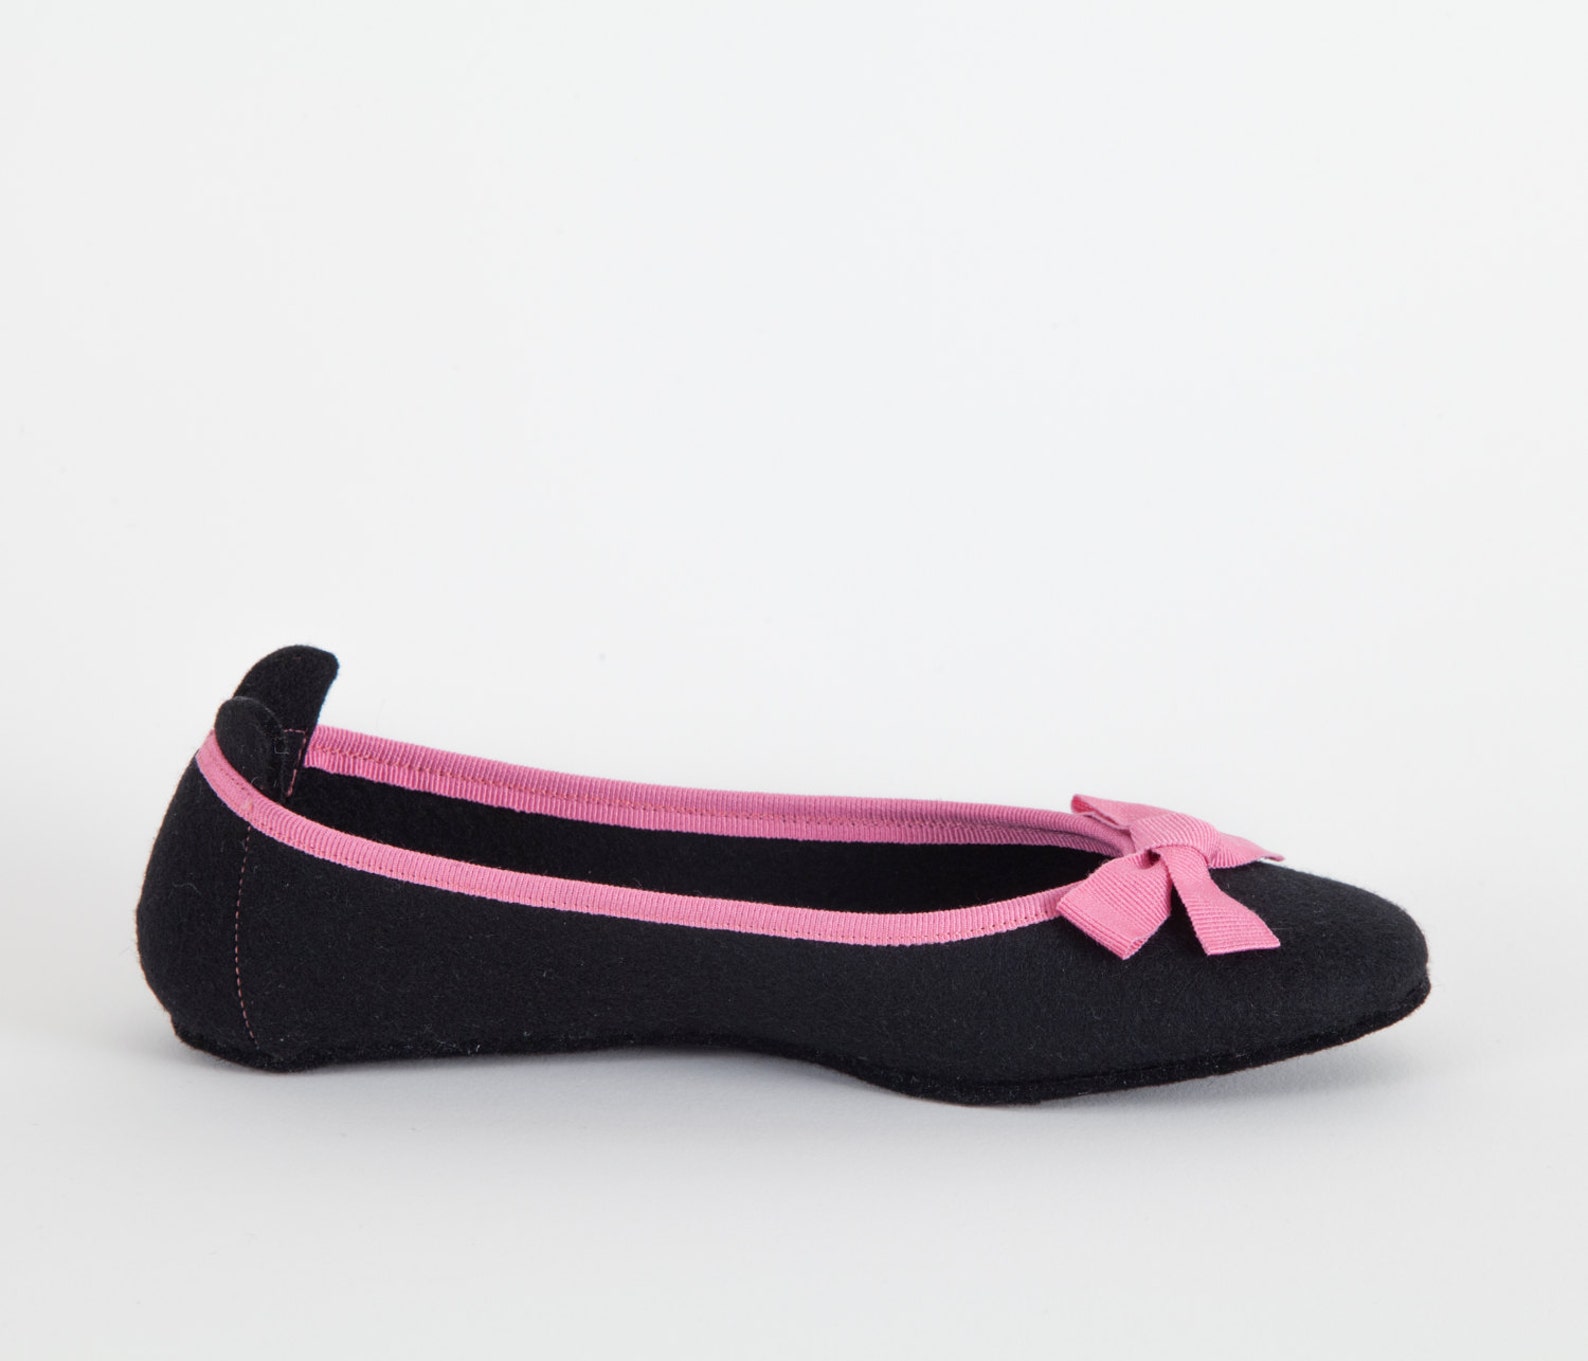 women's slippers- black ballet flat- merino wool felt- handmade in italy- grosgrain ribbon & bow- size eu 36